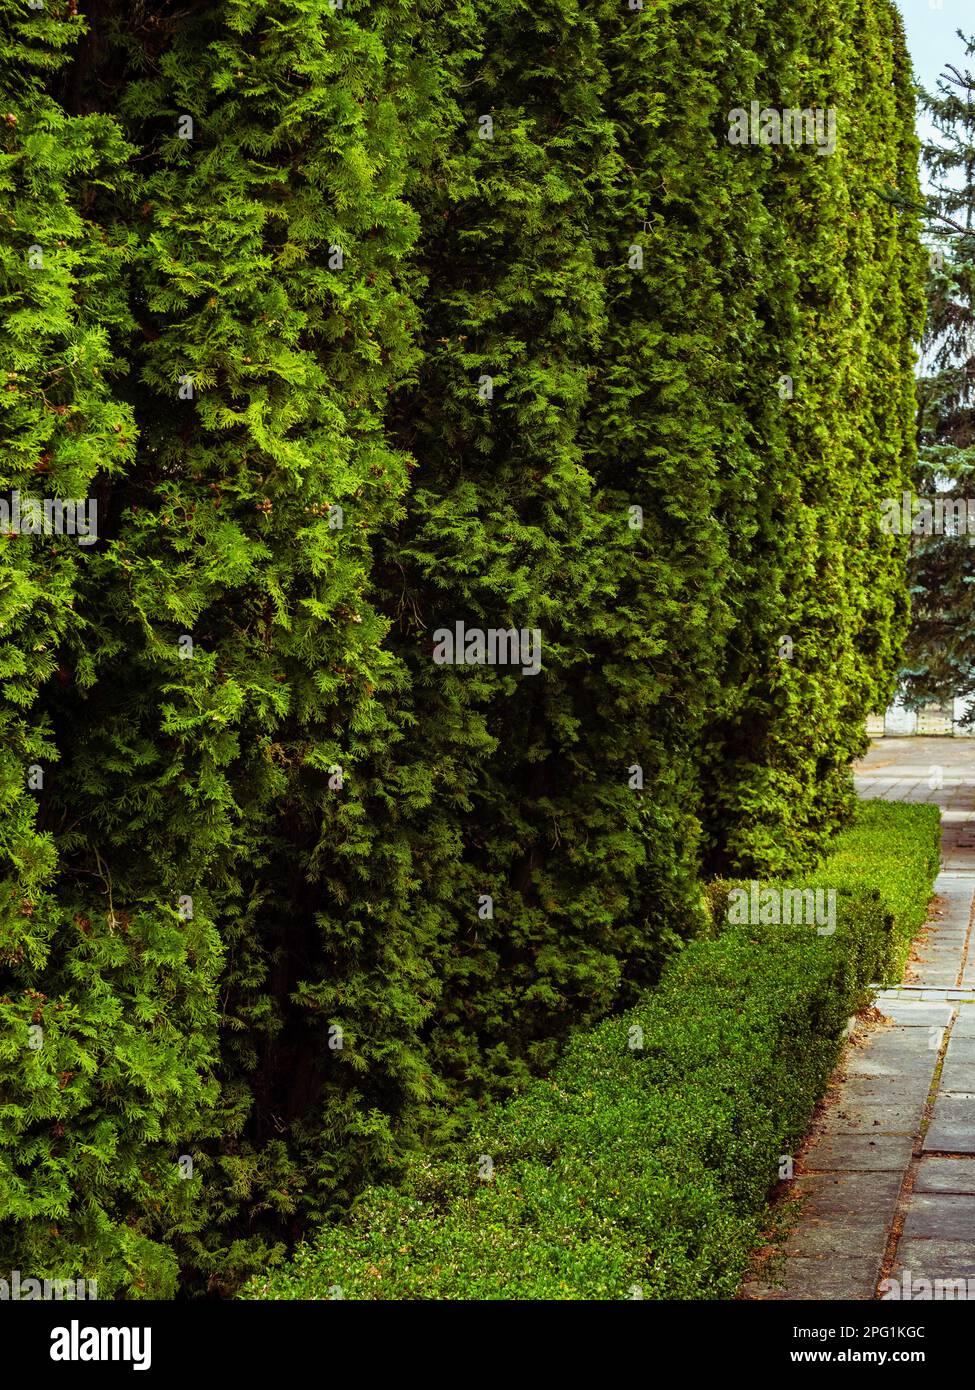 Concrete slab walkway along green bushes and thuja trees Stock Photo